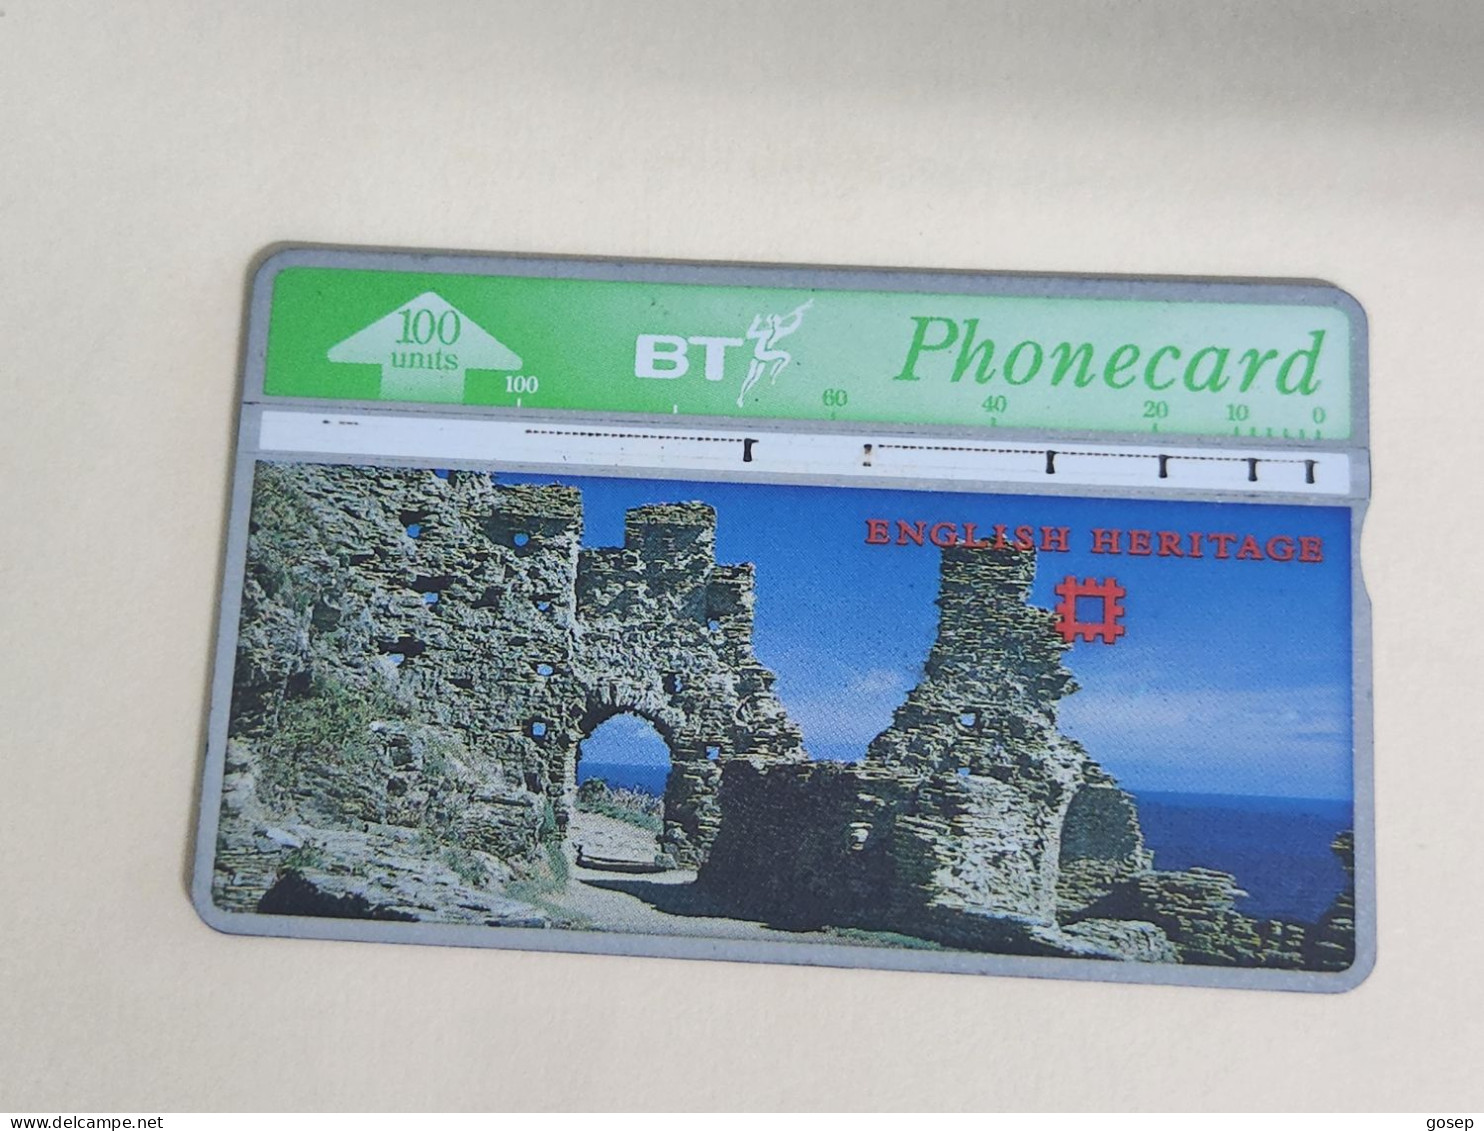 United Kingdom-(BTA121)-HERITAGE-Tintalgel Castle-(209)(100units)(527H03606)price Cataloge3.00£-used+1card Prepiad Free - BT Werbezwecke